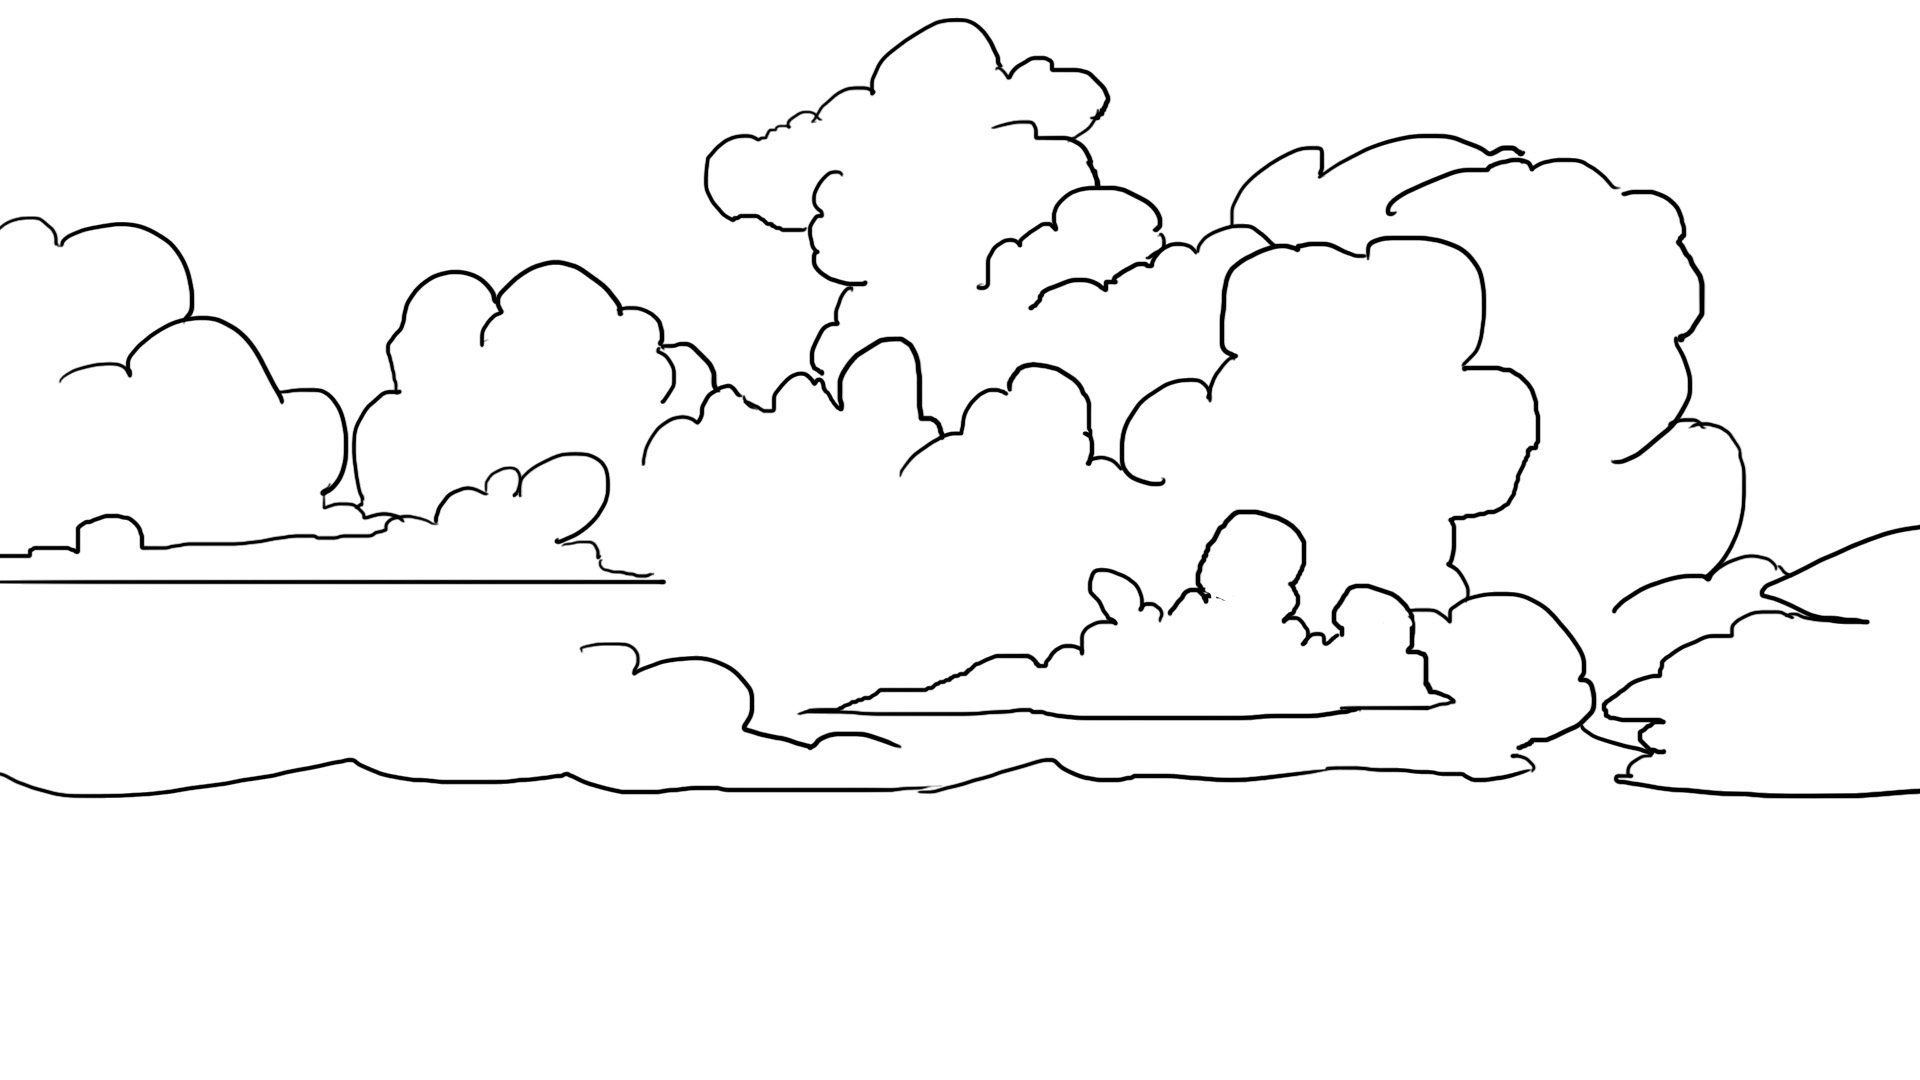 Exemple d'un dessin de nuage dense illustratif